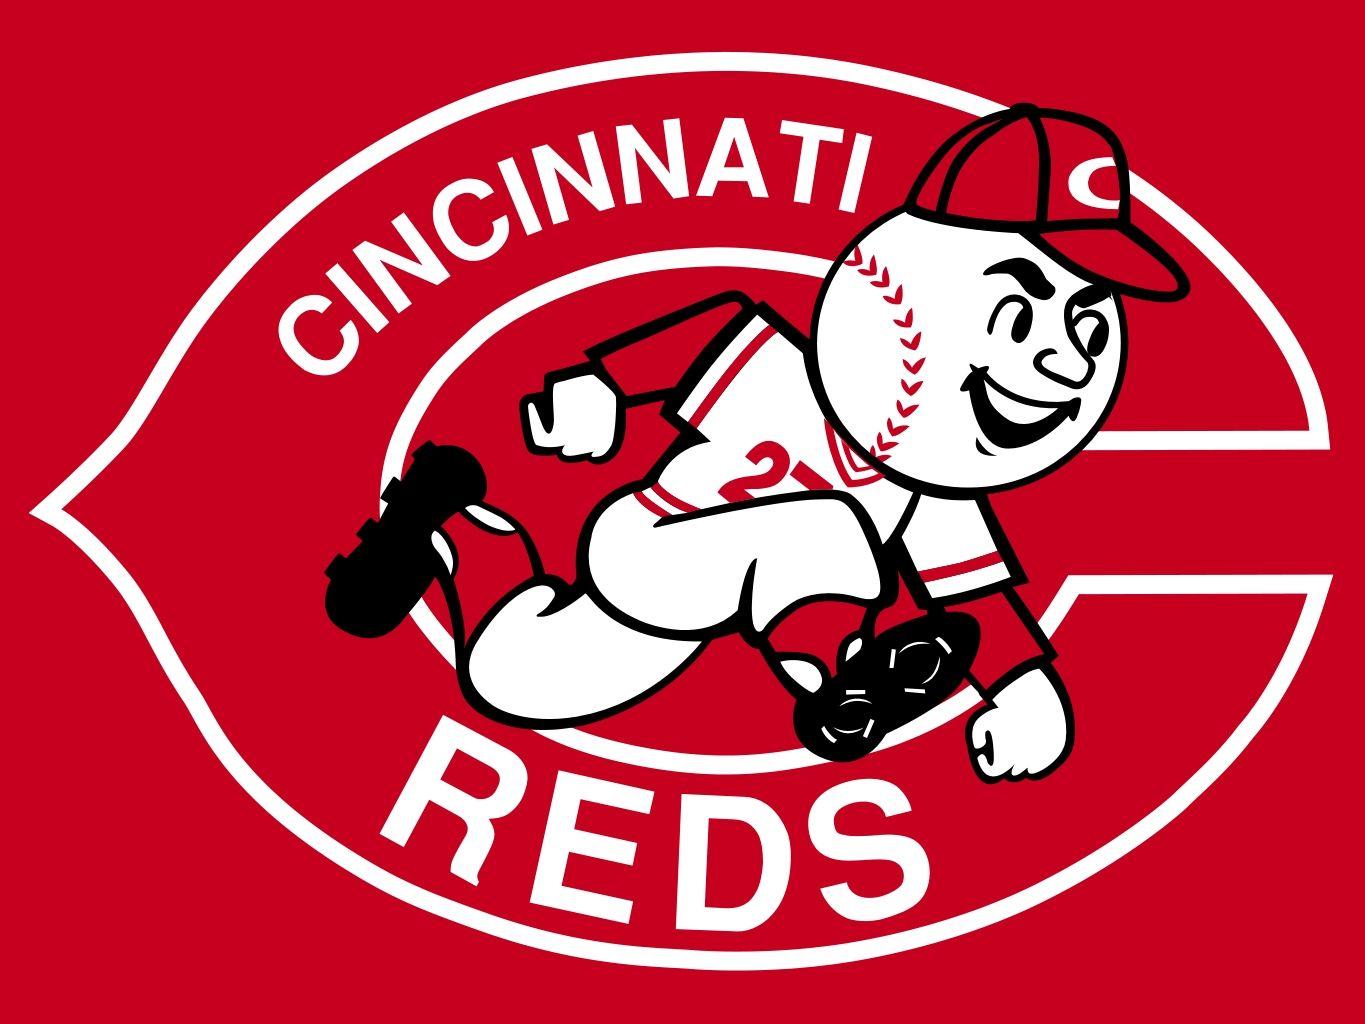 Reds Baseball Logo - Travel: Ohio. Cincinnati Reds, Cincinnati